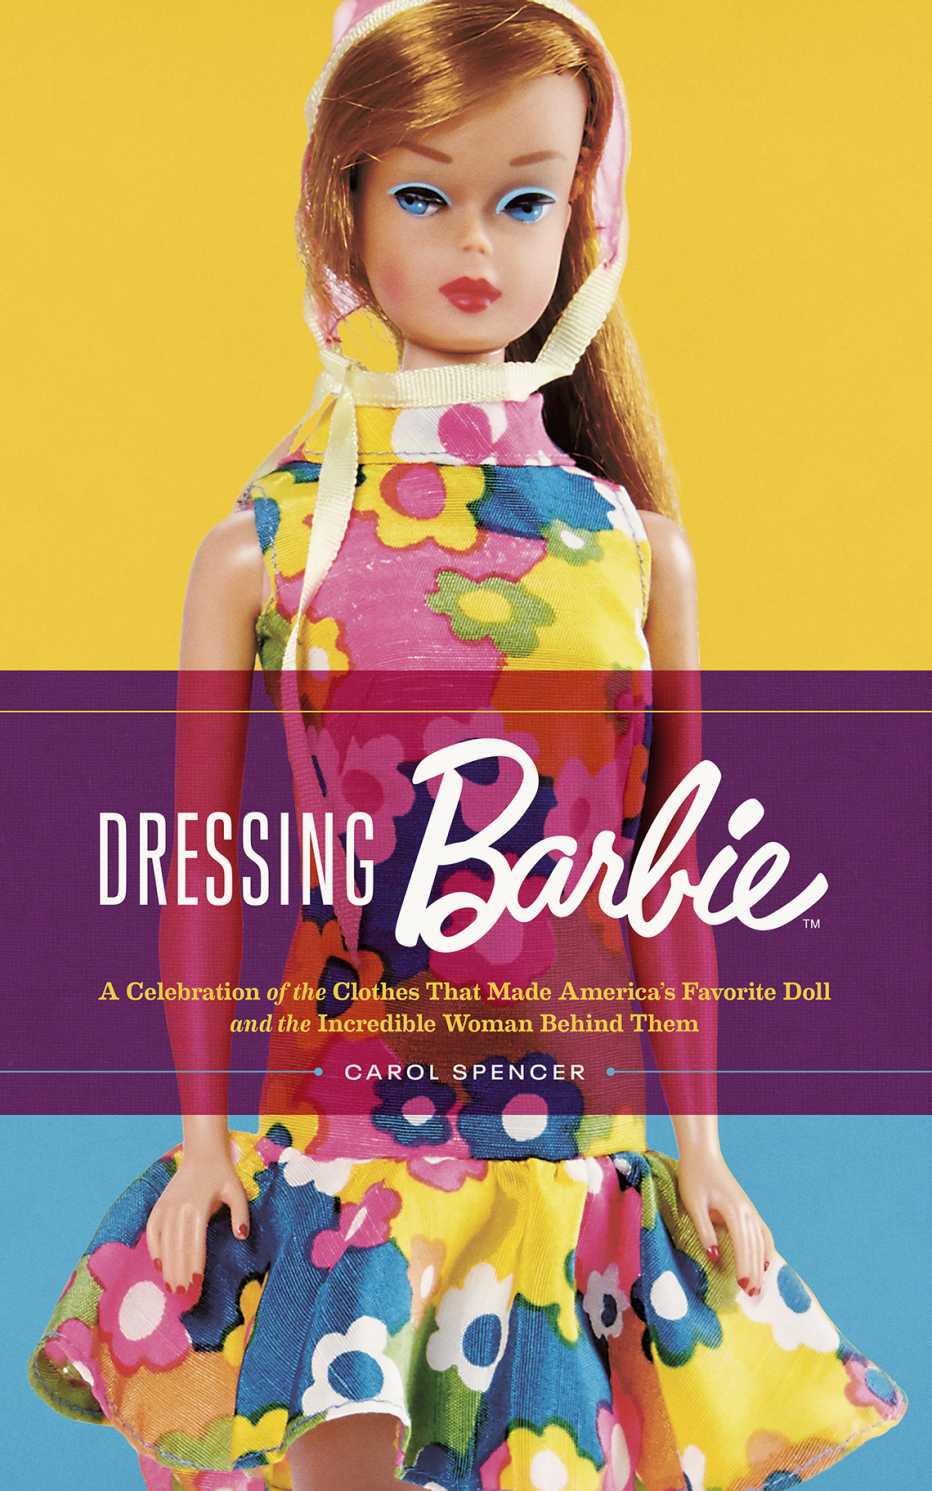 La portada del libro de Carol Spencer, "Dressing Barbie".